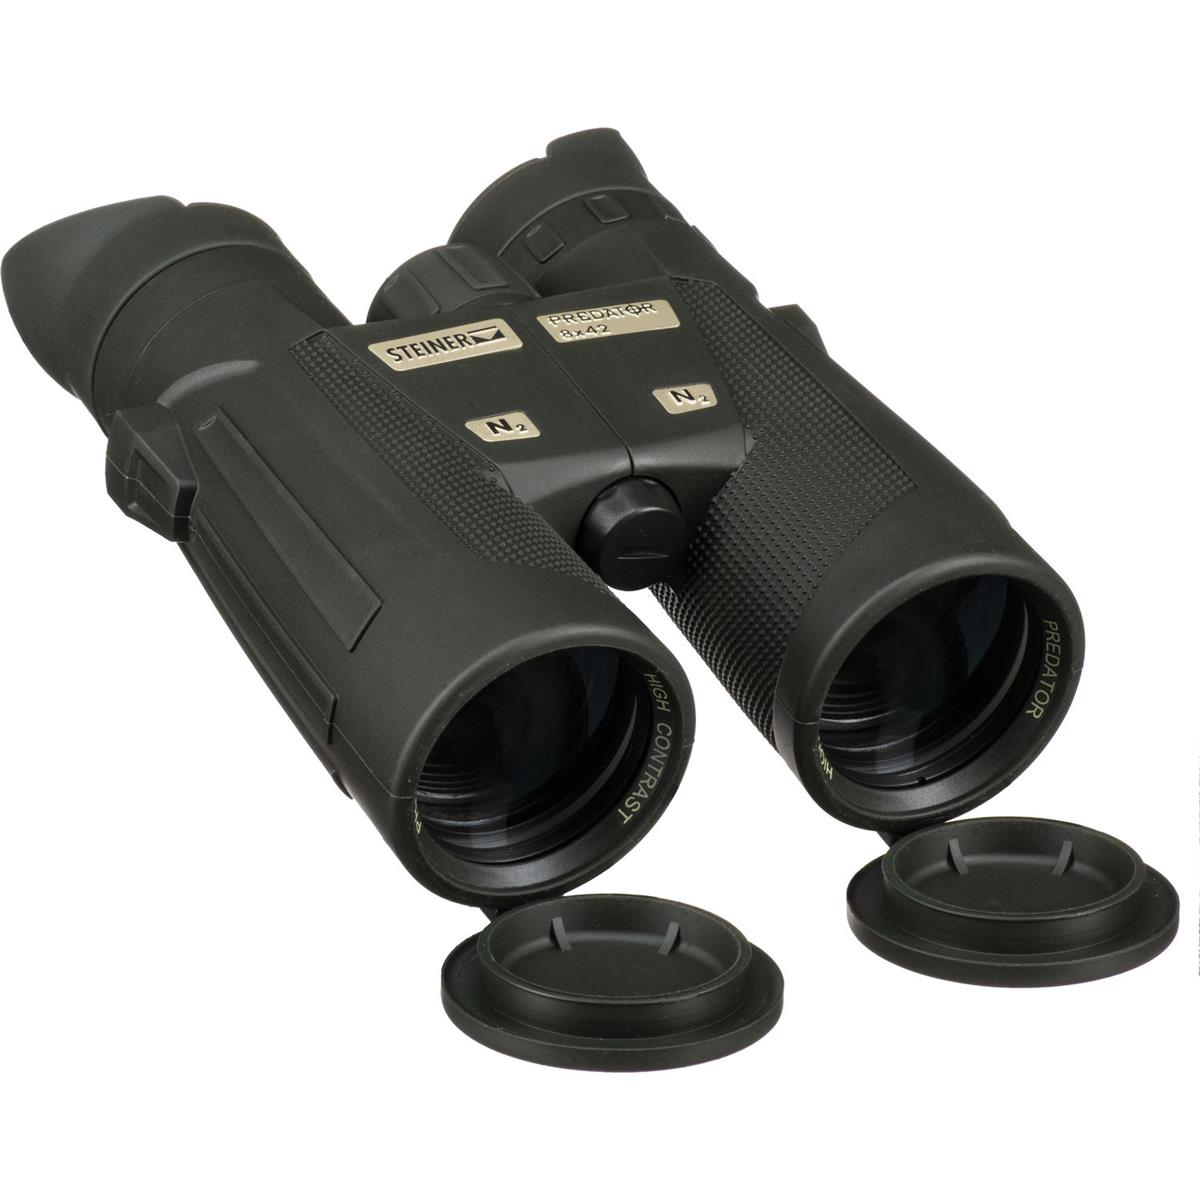 Steiner 8x42 Predator Waterproof Binoculars $199 + free s/h at Adorama